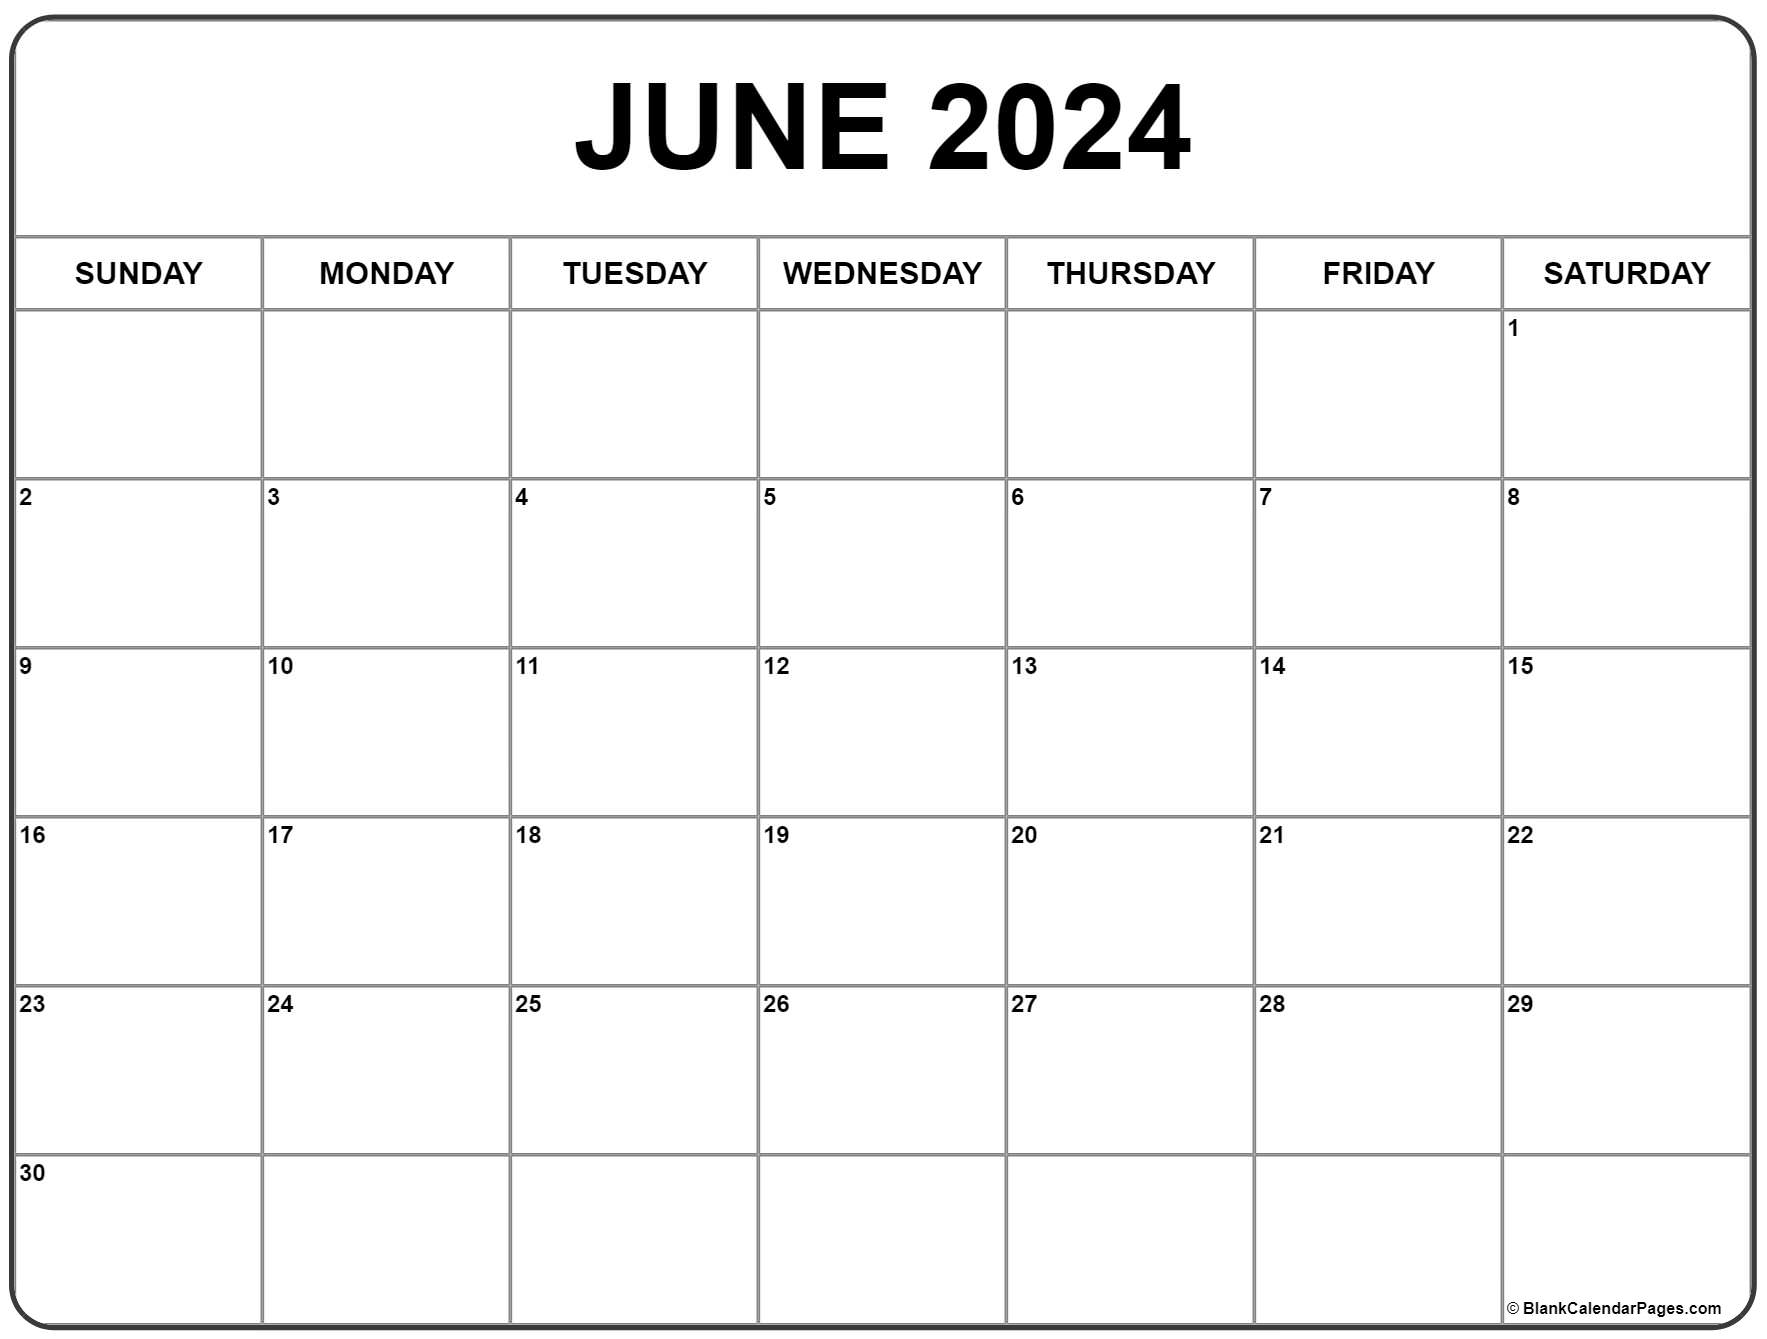 June 2024 Calendar | Free Printable Calendar for Calendar 2024 Printable Free June